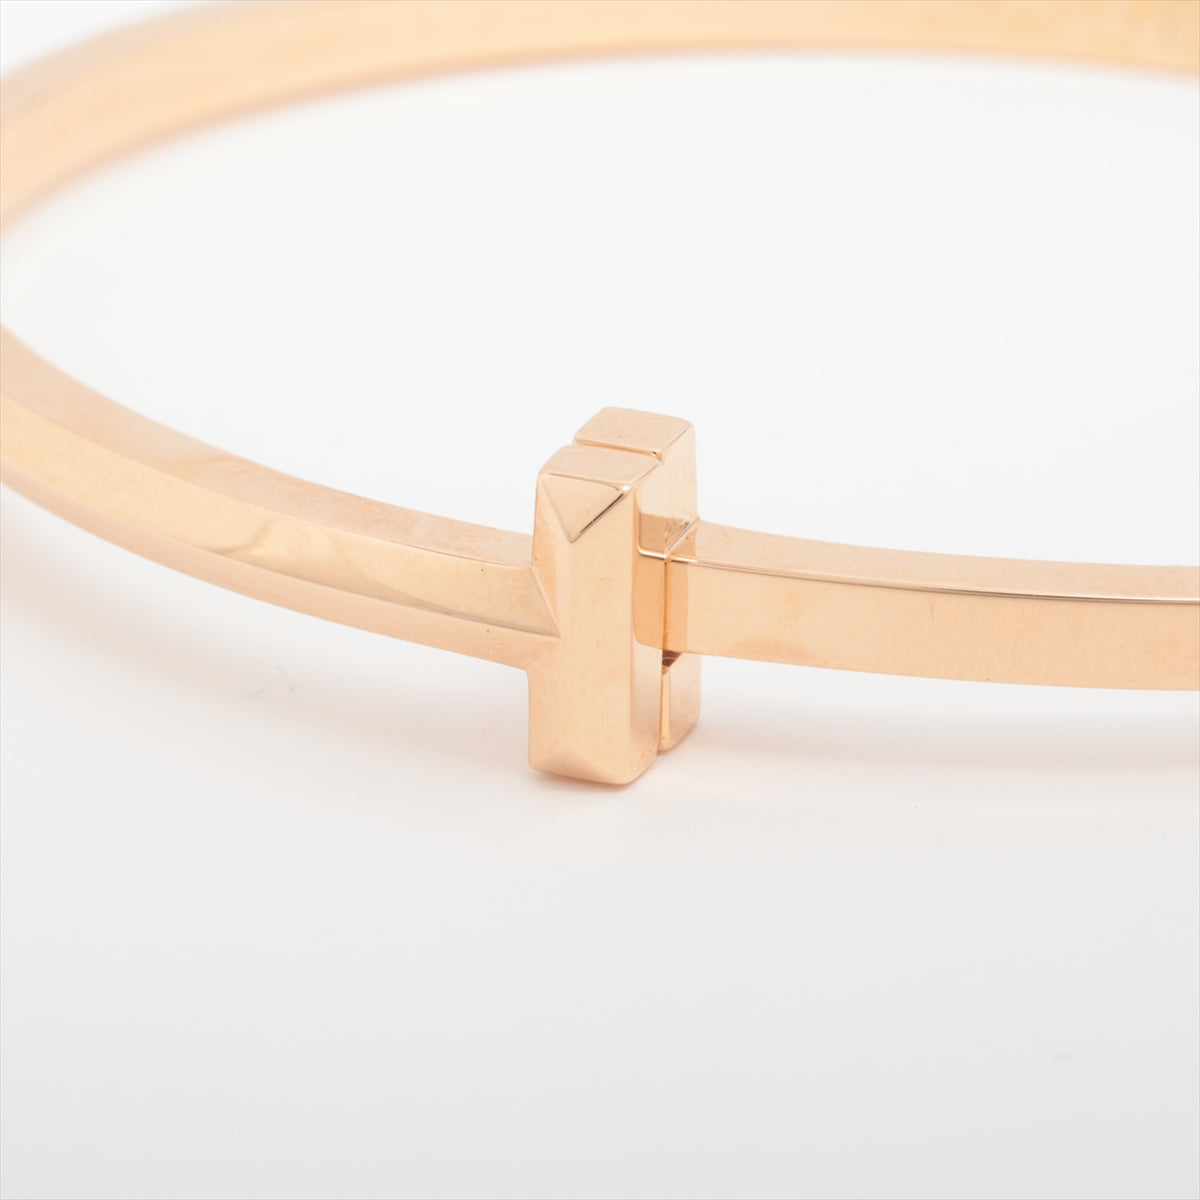 Tiffany T-One Narrow hinges Bracelet 750(PG) 24.5g